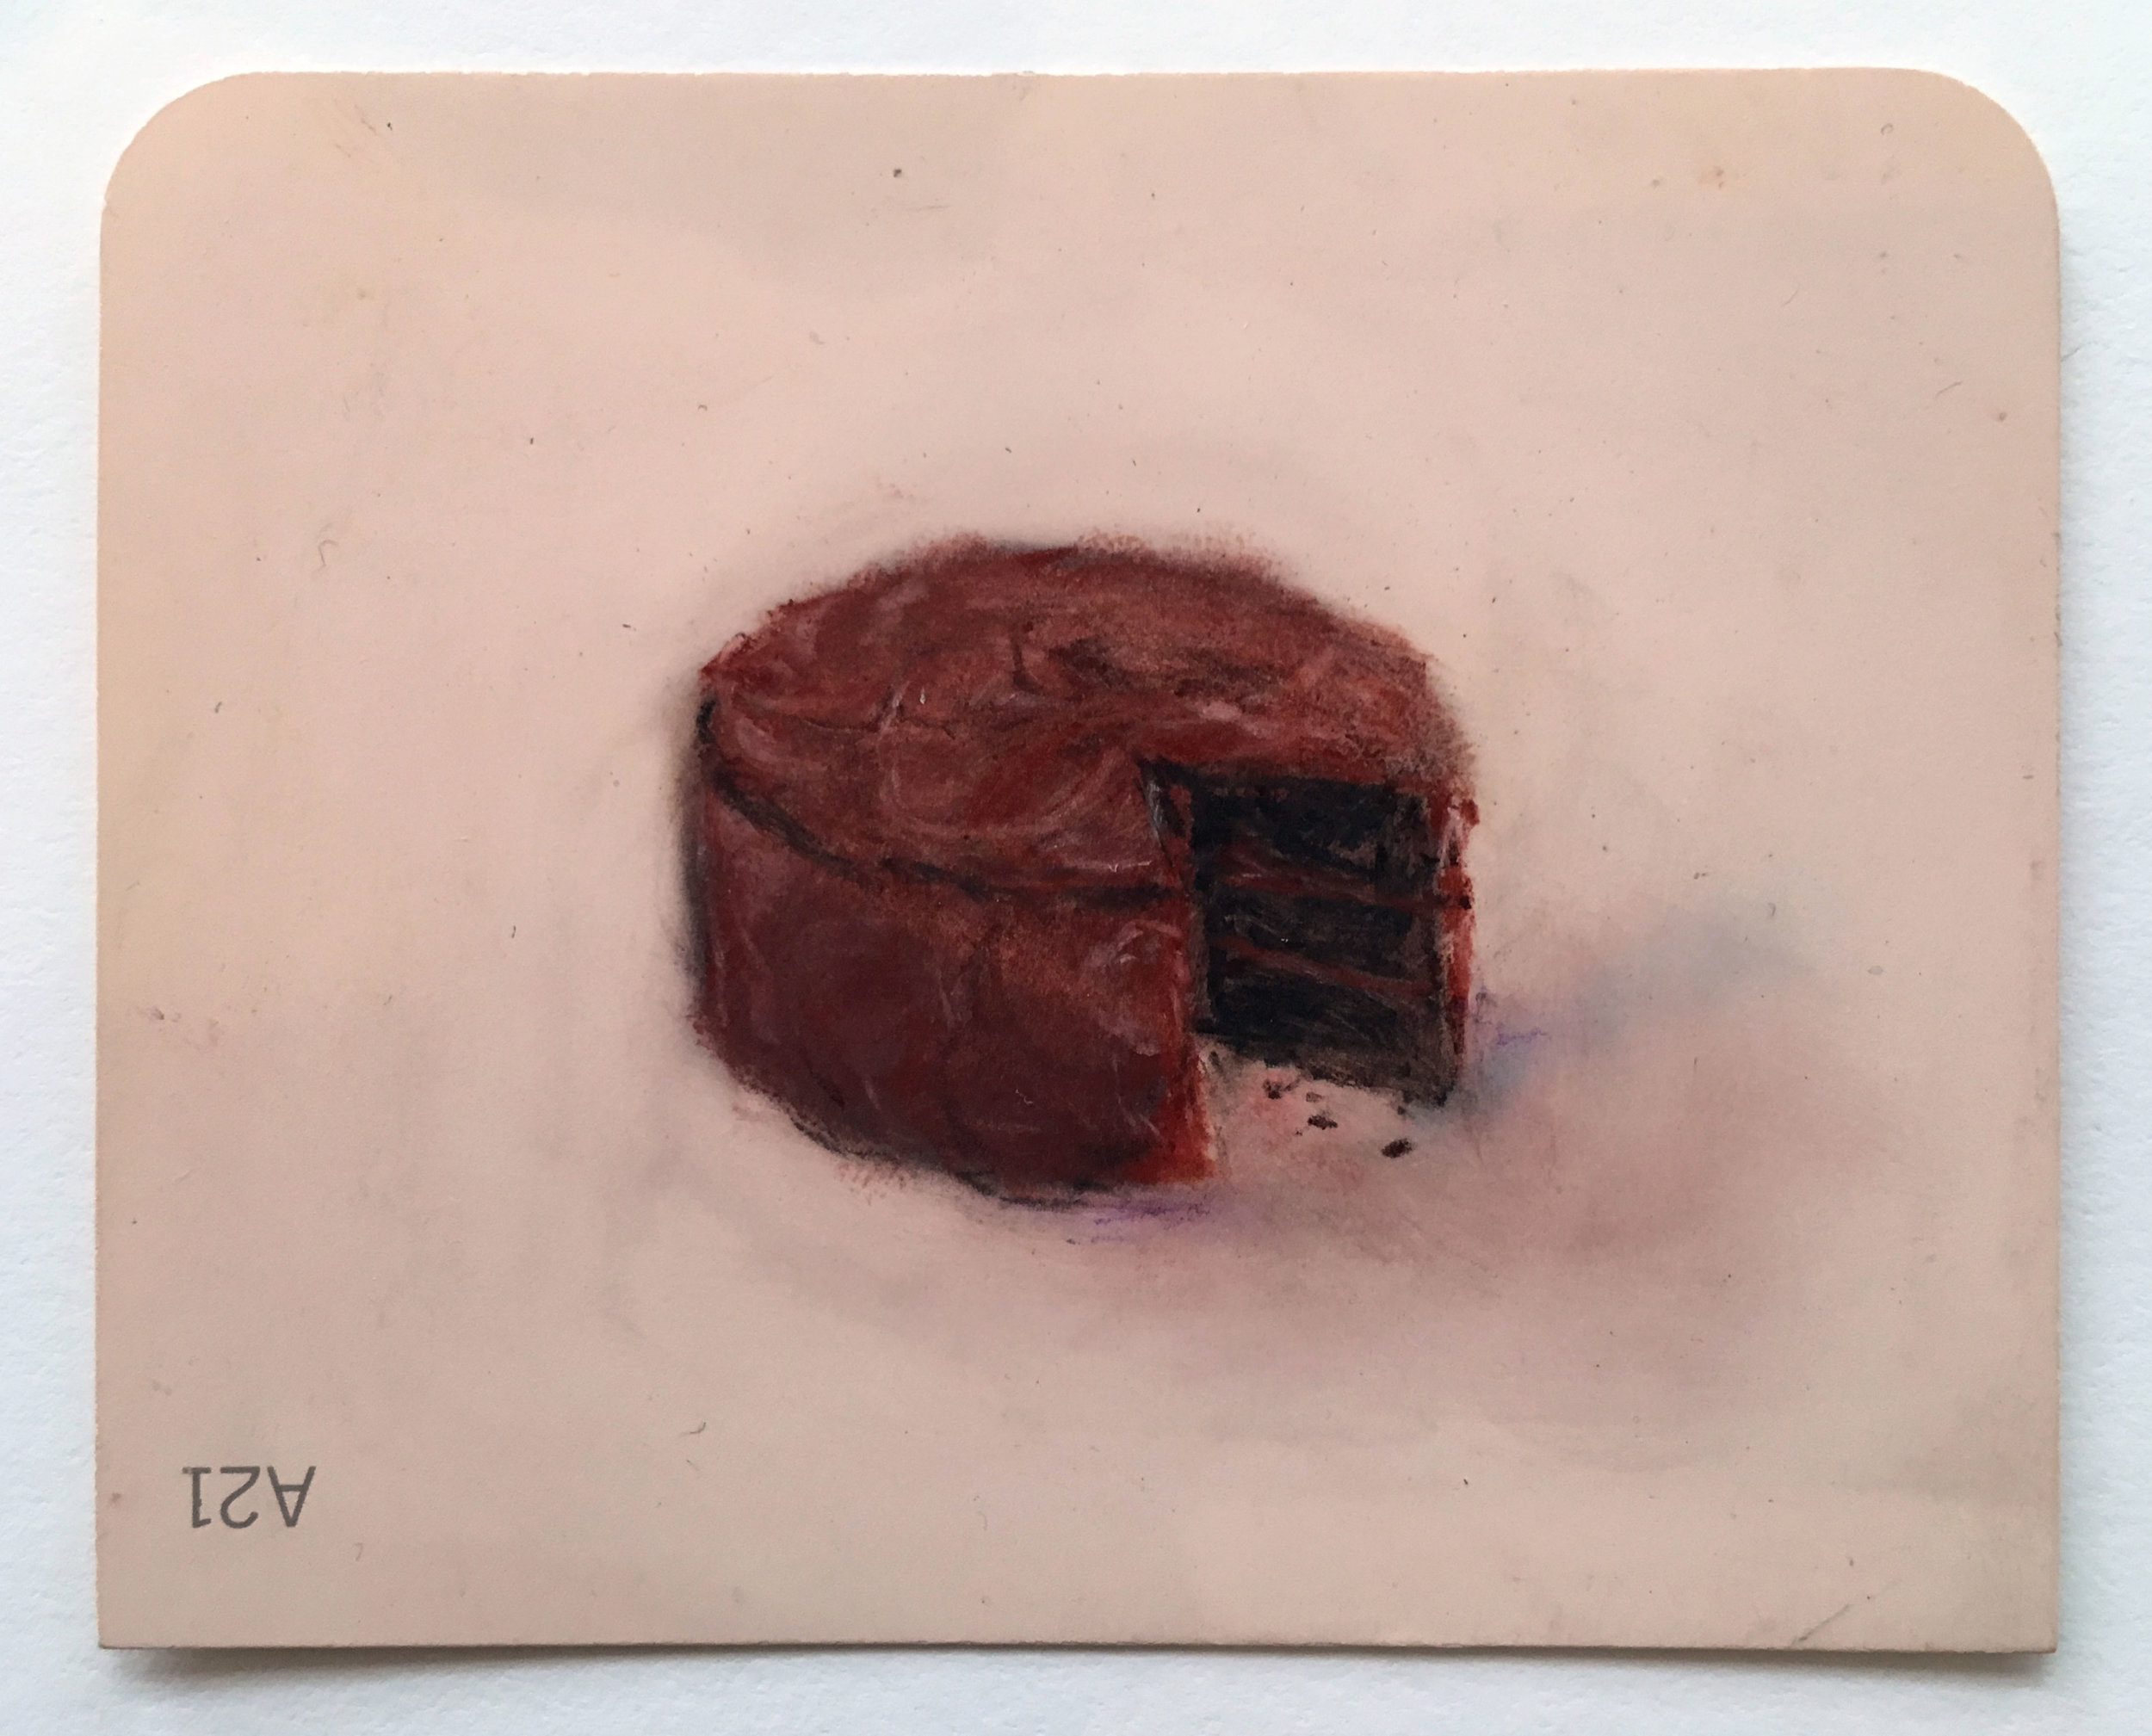  Mie Yim,&nbsp; Chocolate Cake , 2015, Pastel on Martha Stewart Paintchip, 3 x 4 inches 